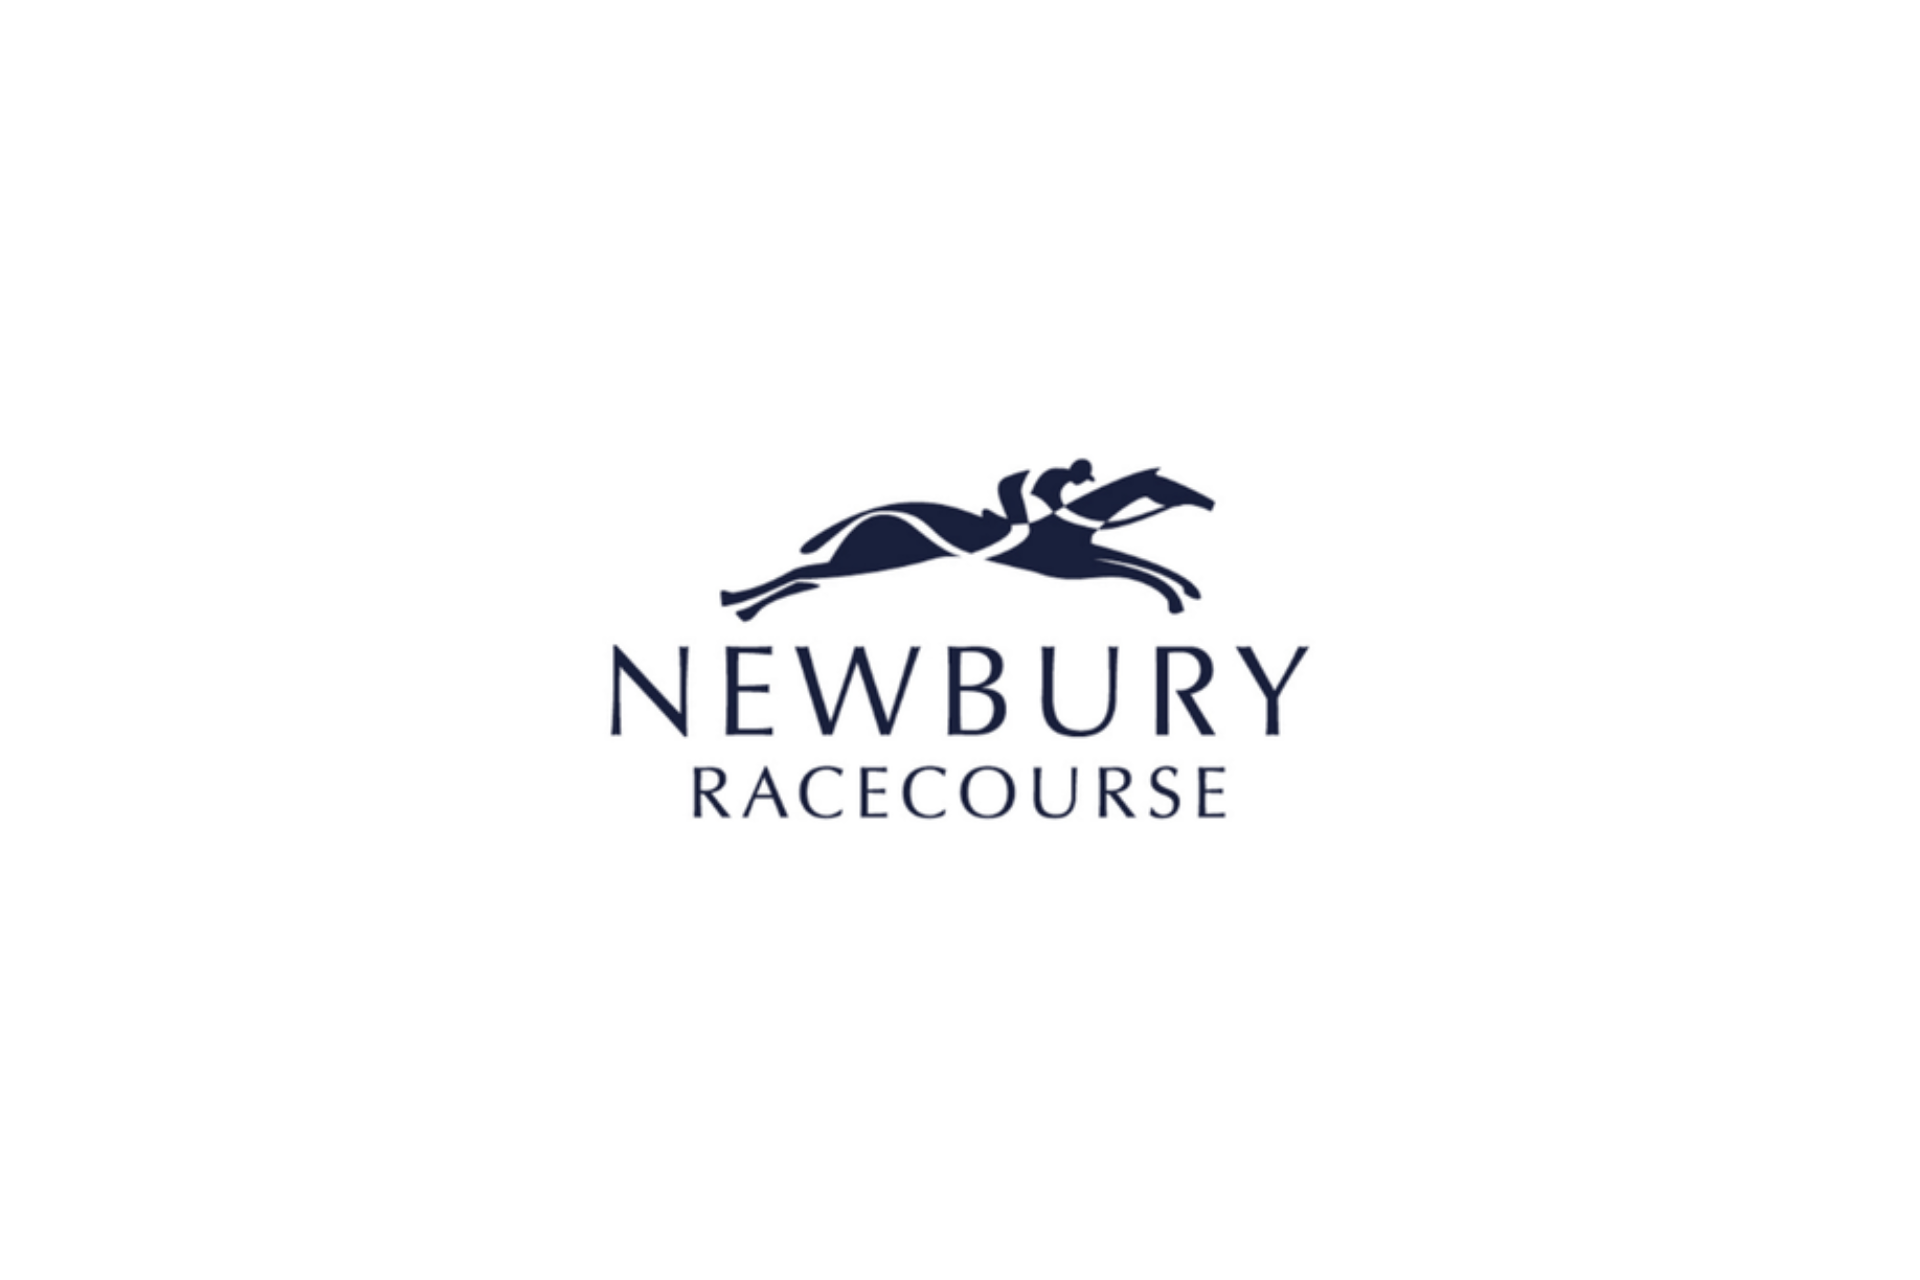 an image of newbury racecourse logo